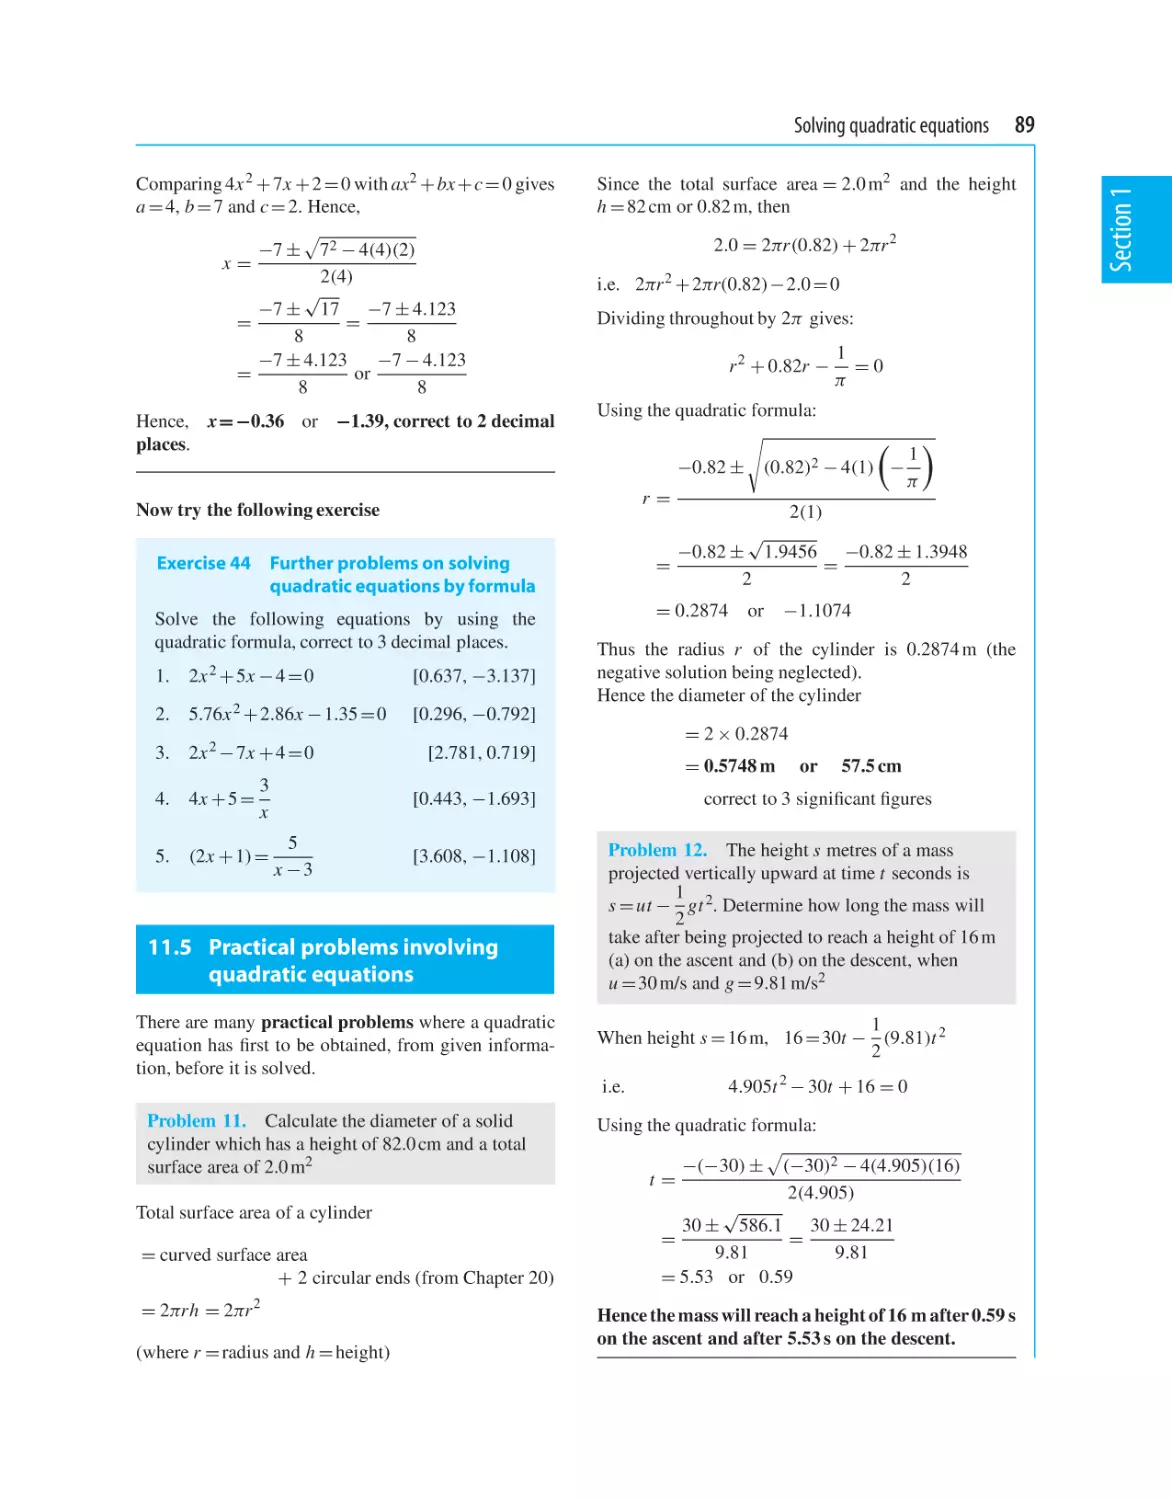 11.5 Practical problems involving quadratic equations